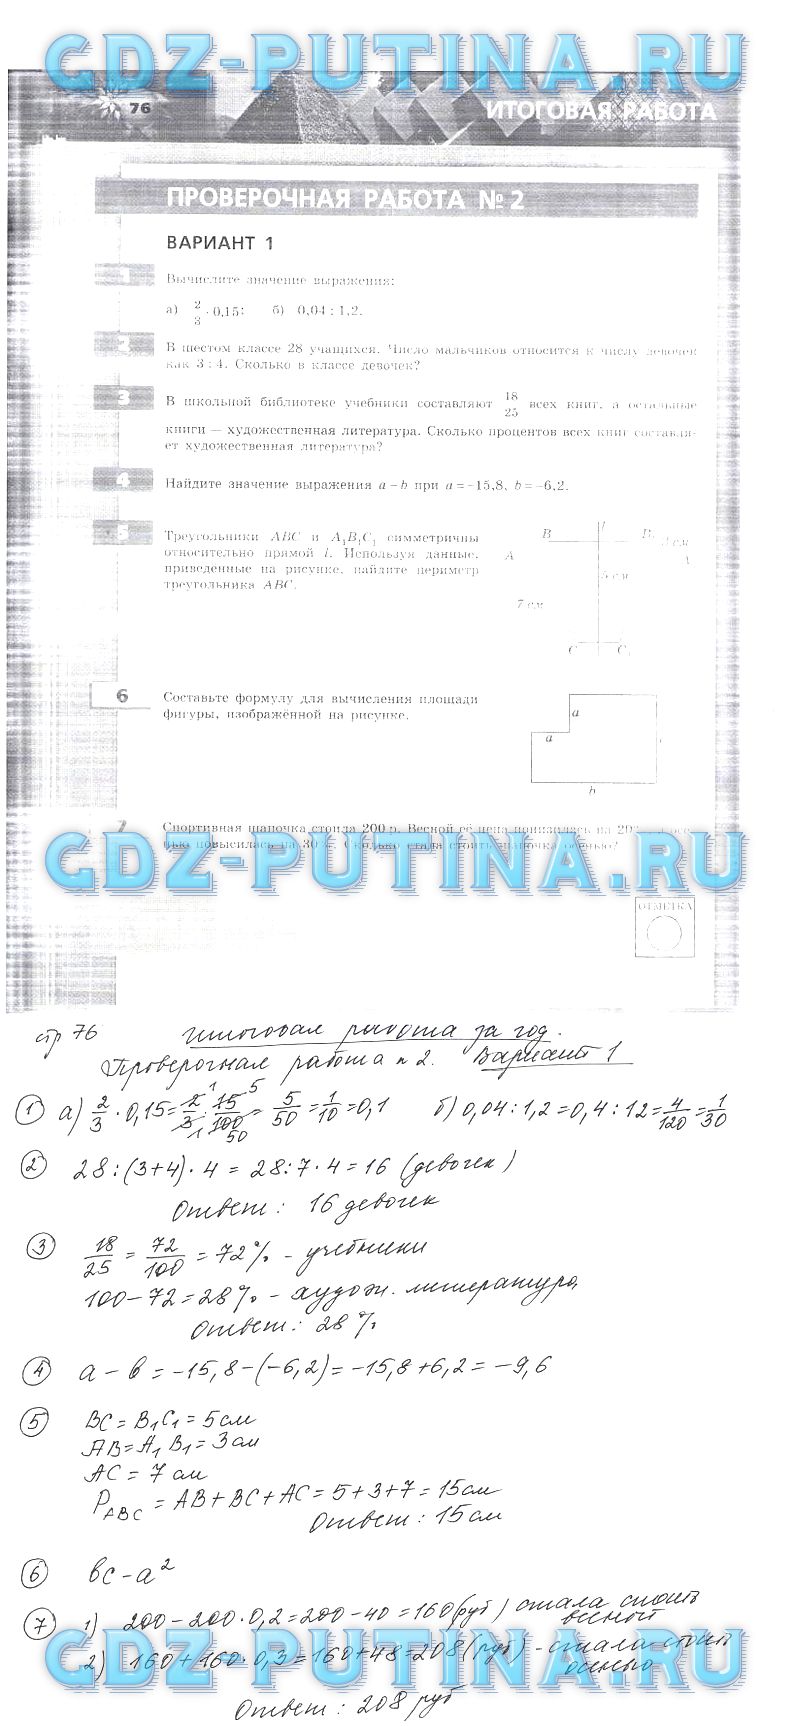 гдз 6 класс тетрадь-экзаменатор страница 76 математика Кузнецова